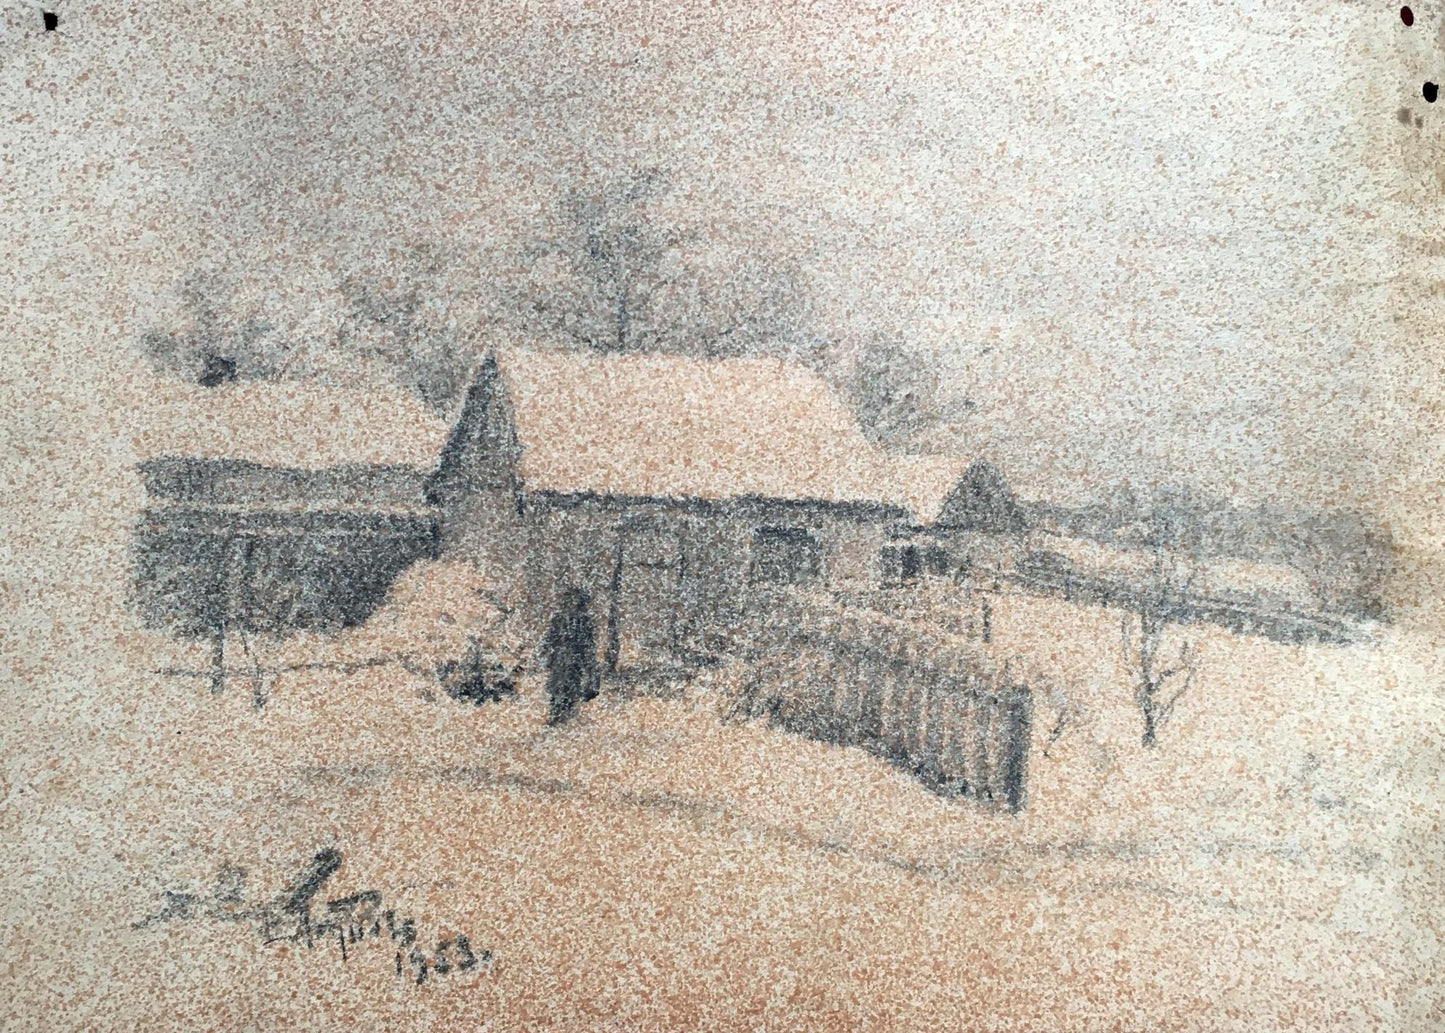 Pencil painting Blizzard in the village Dmitry Lednev